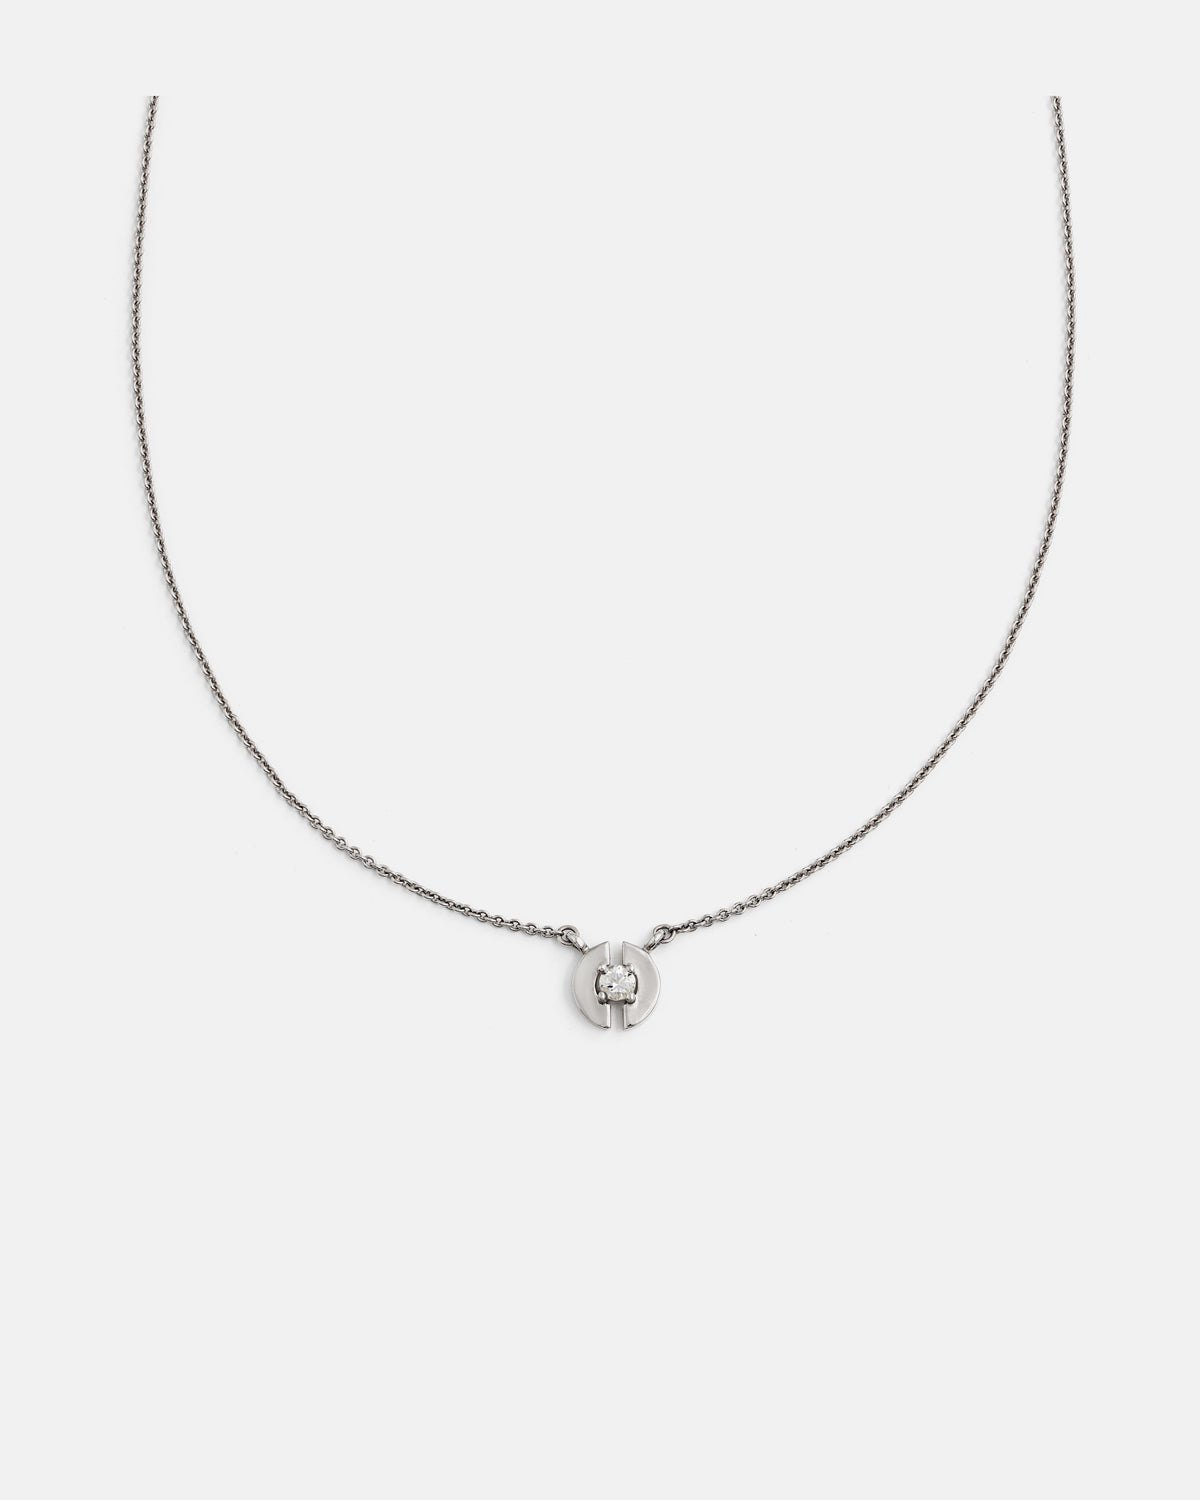 Stein Necklace in Silver with White Quartz